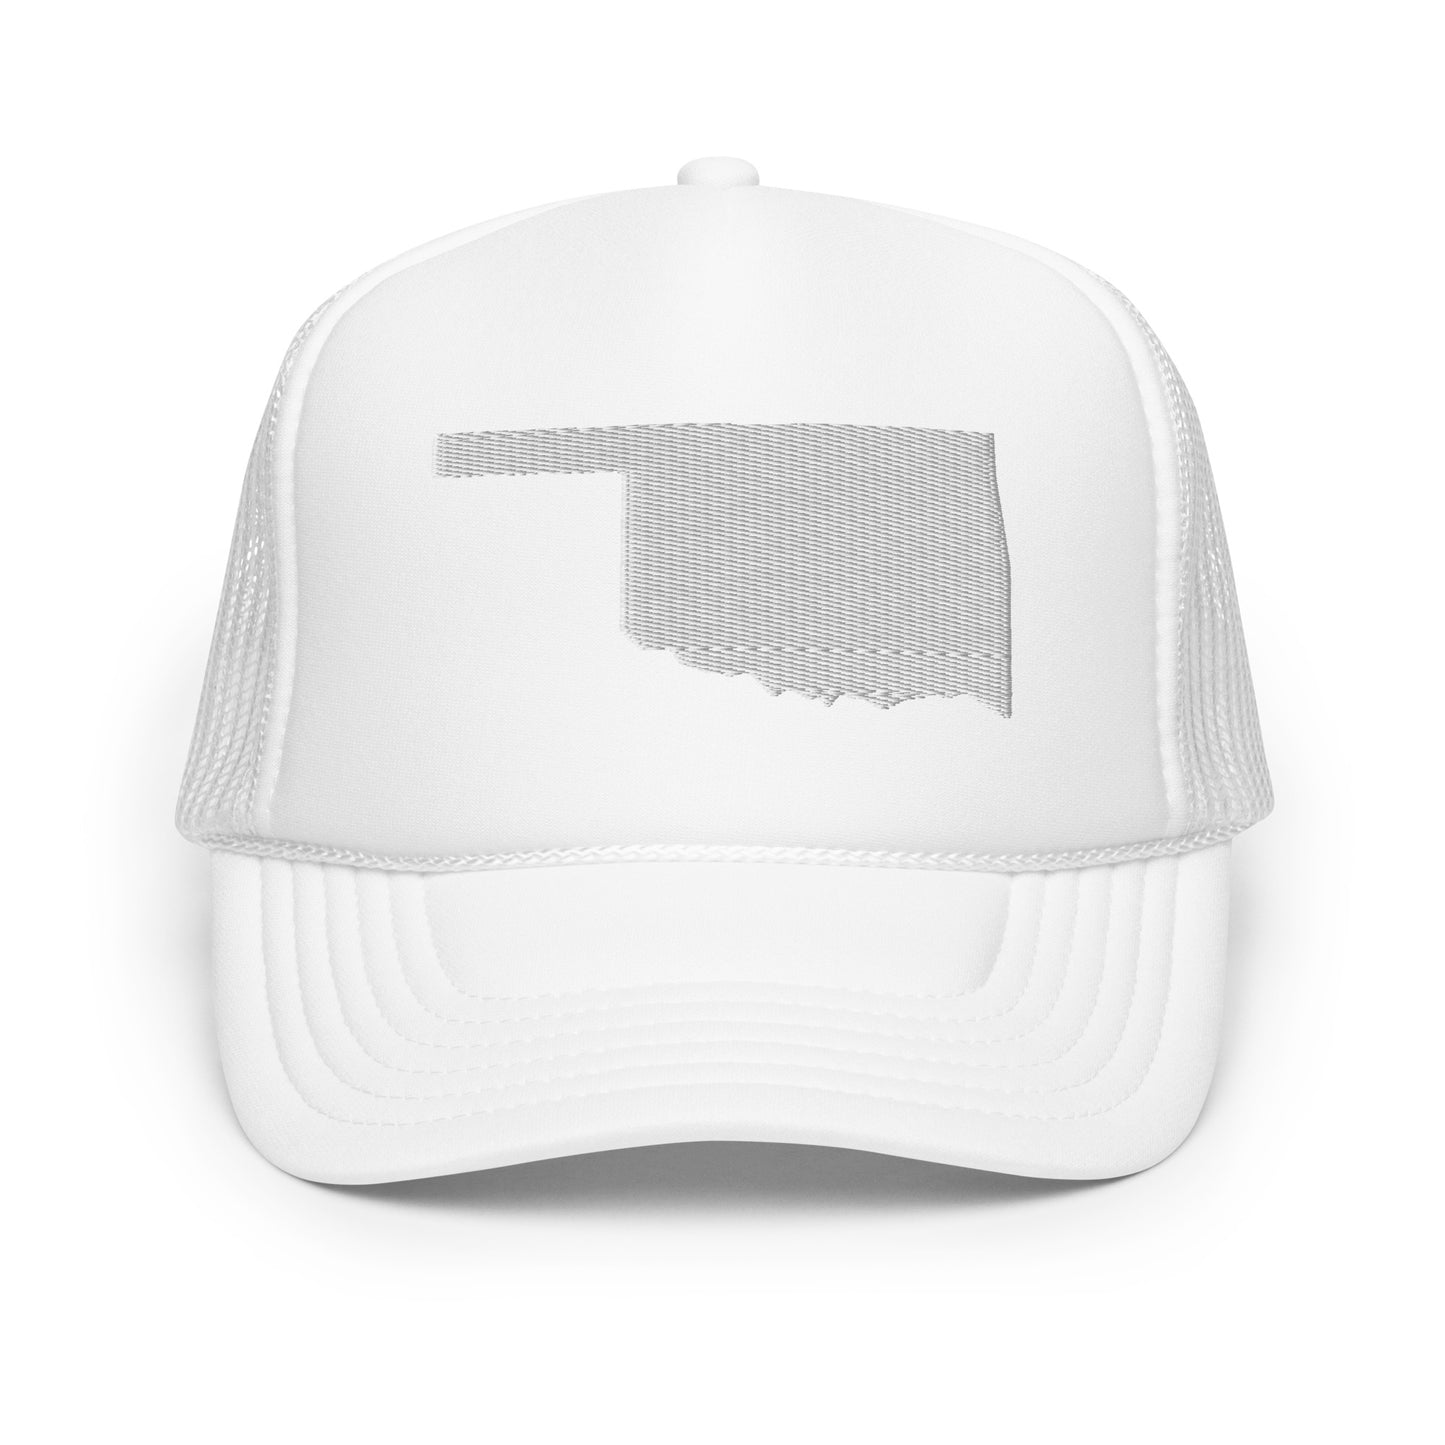 Oklahoma State Silhouette Foam 5 Panel A-Frame Snapback Trucker Hat